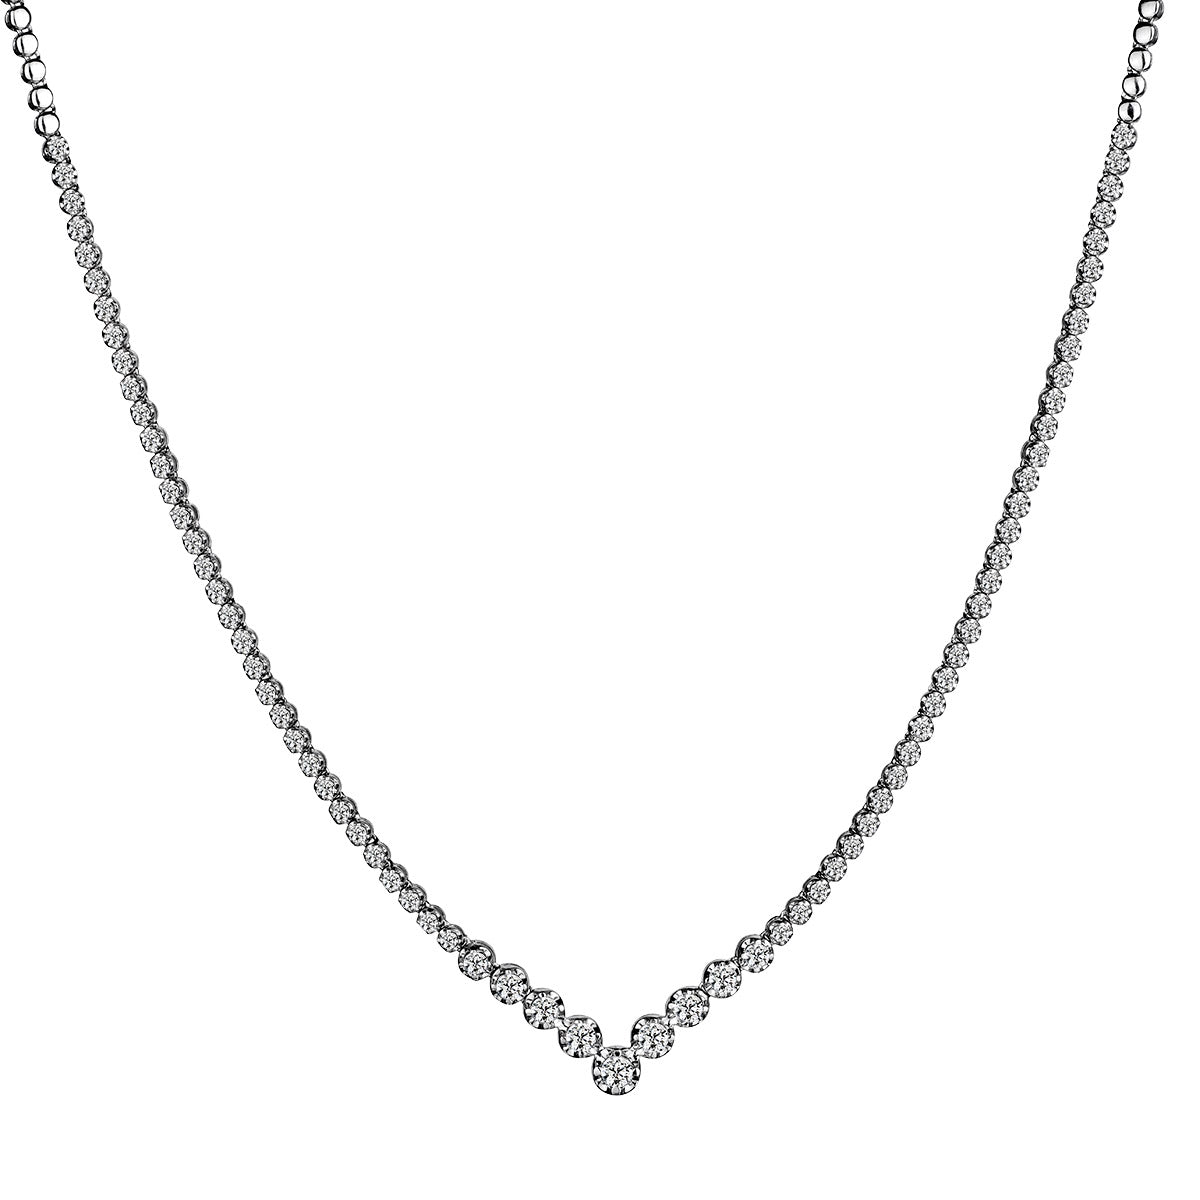 3.00 Carat Diamond Necklace, 10kt White Gold